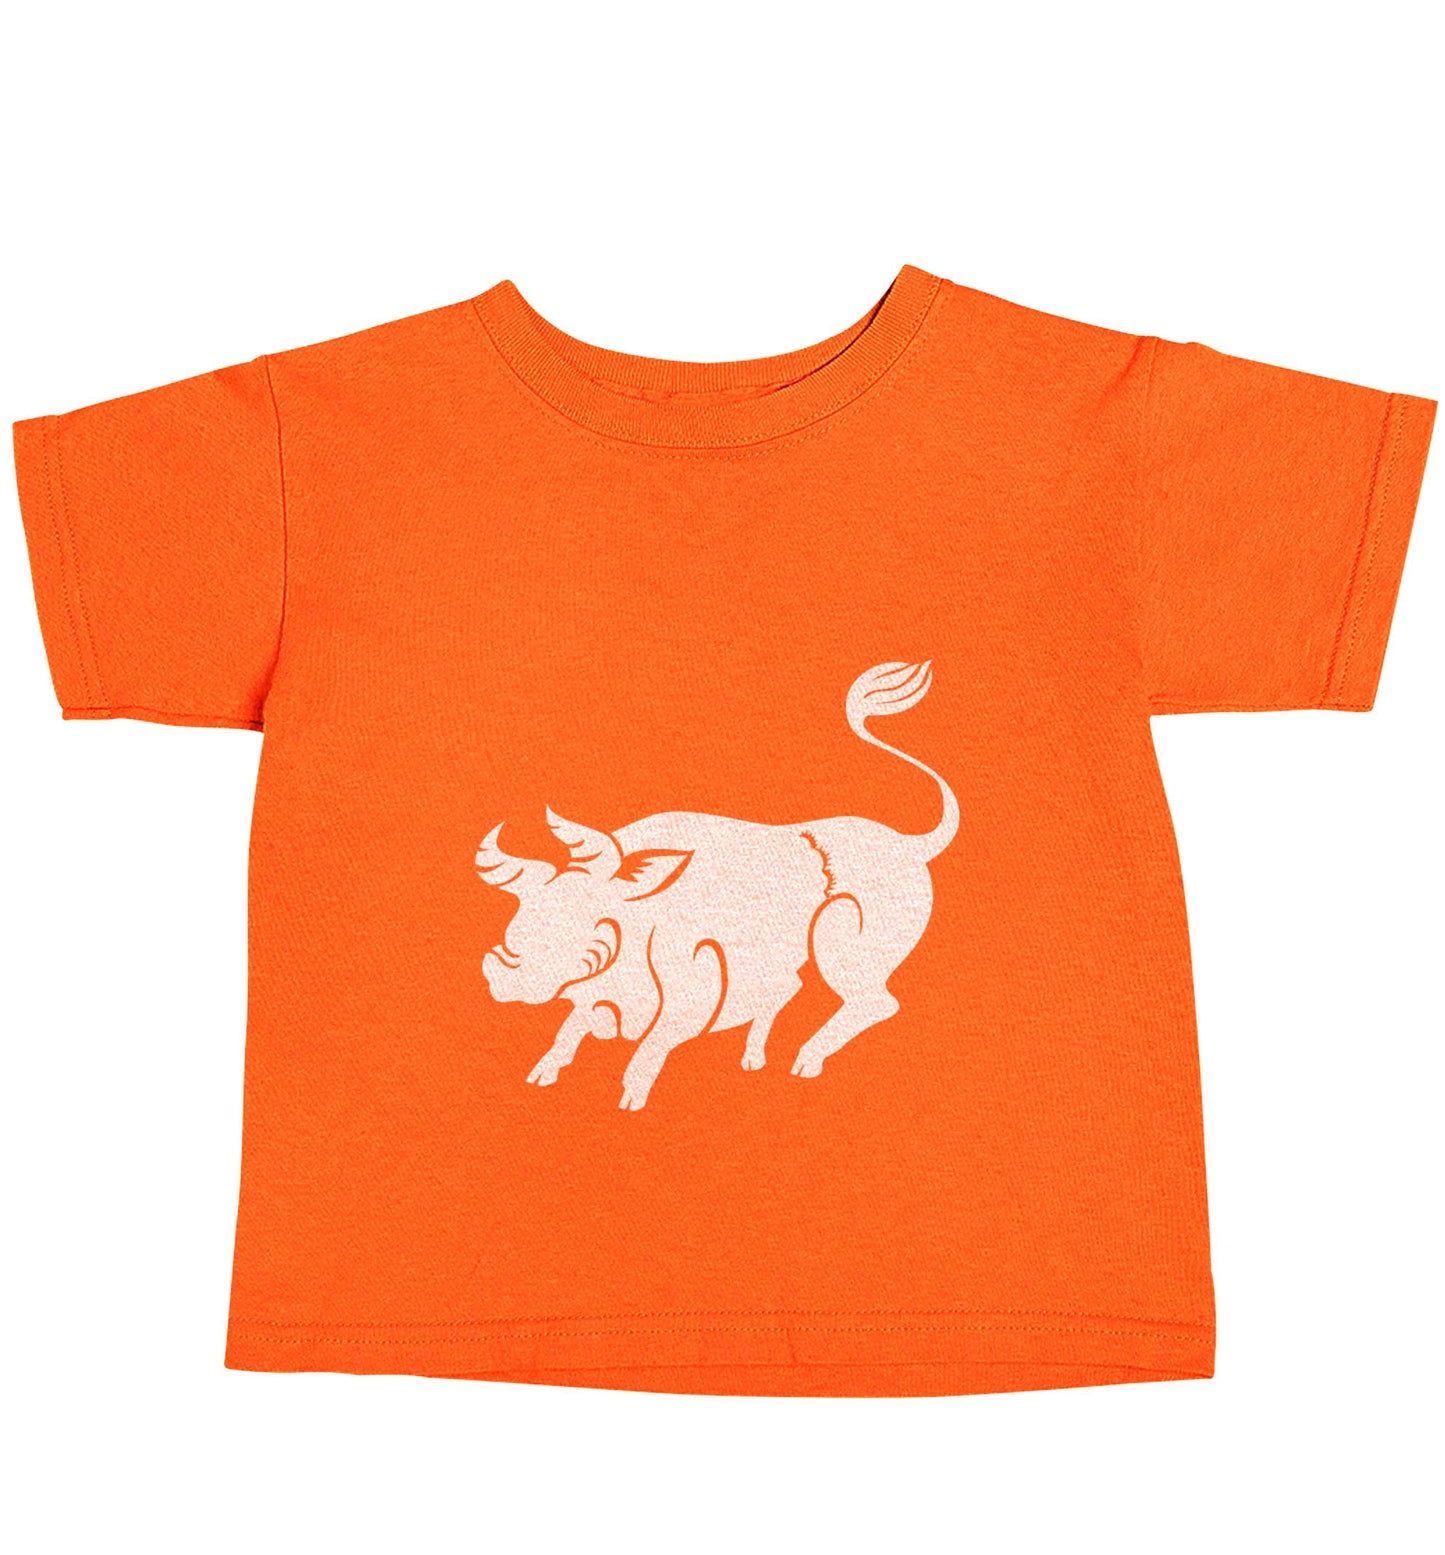 Blue ox orange baby toddler Tshirt 2 Years